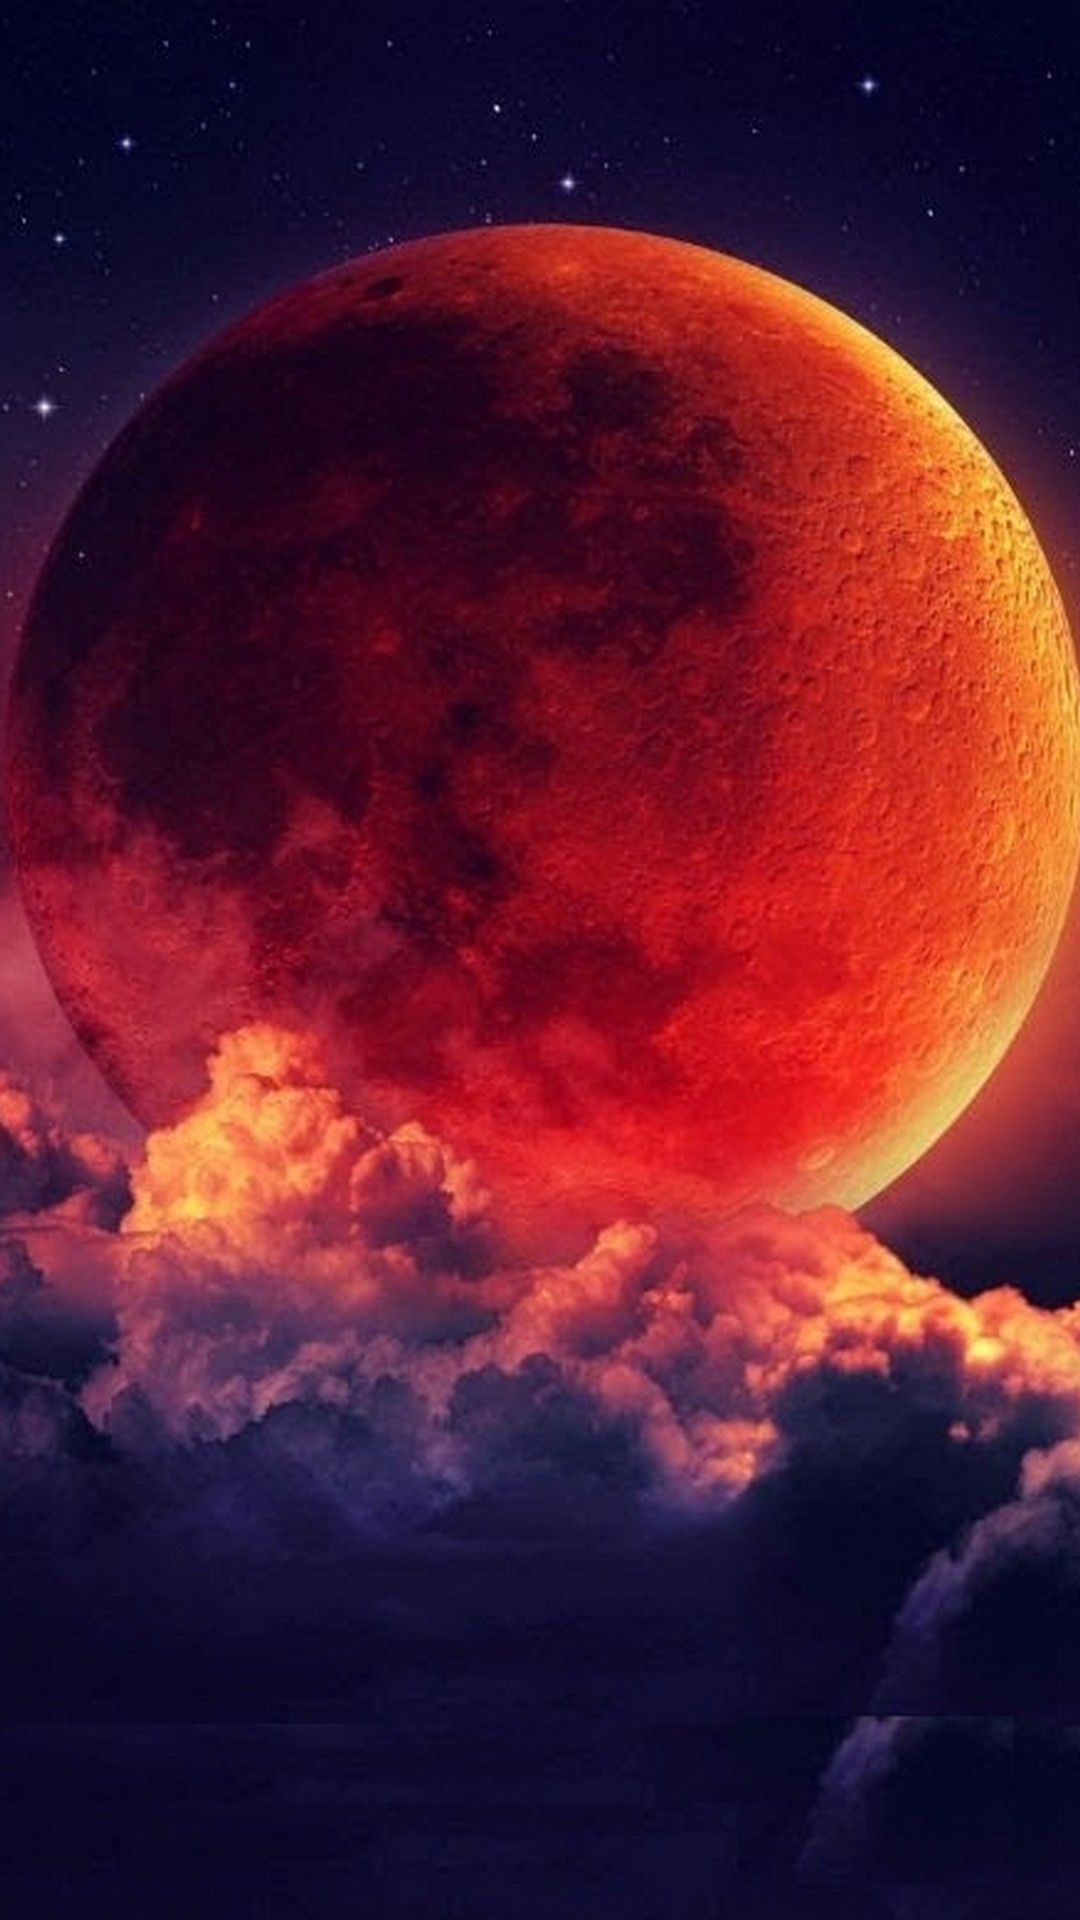 Blood Moon Wallpaper iPhone iPhonewallpaper